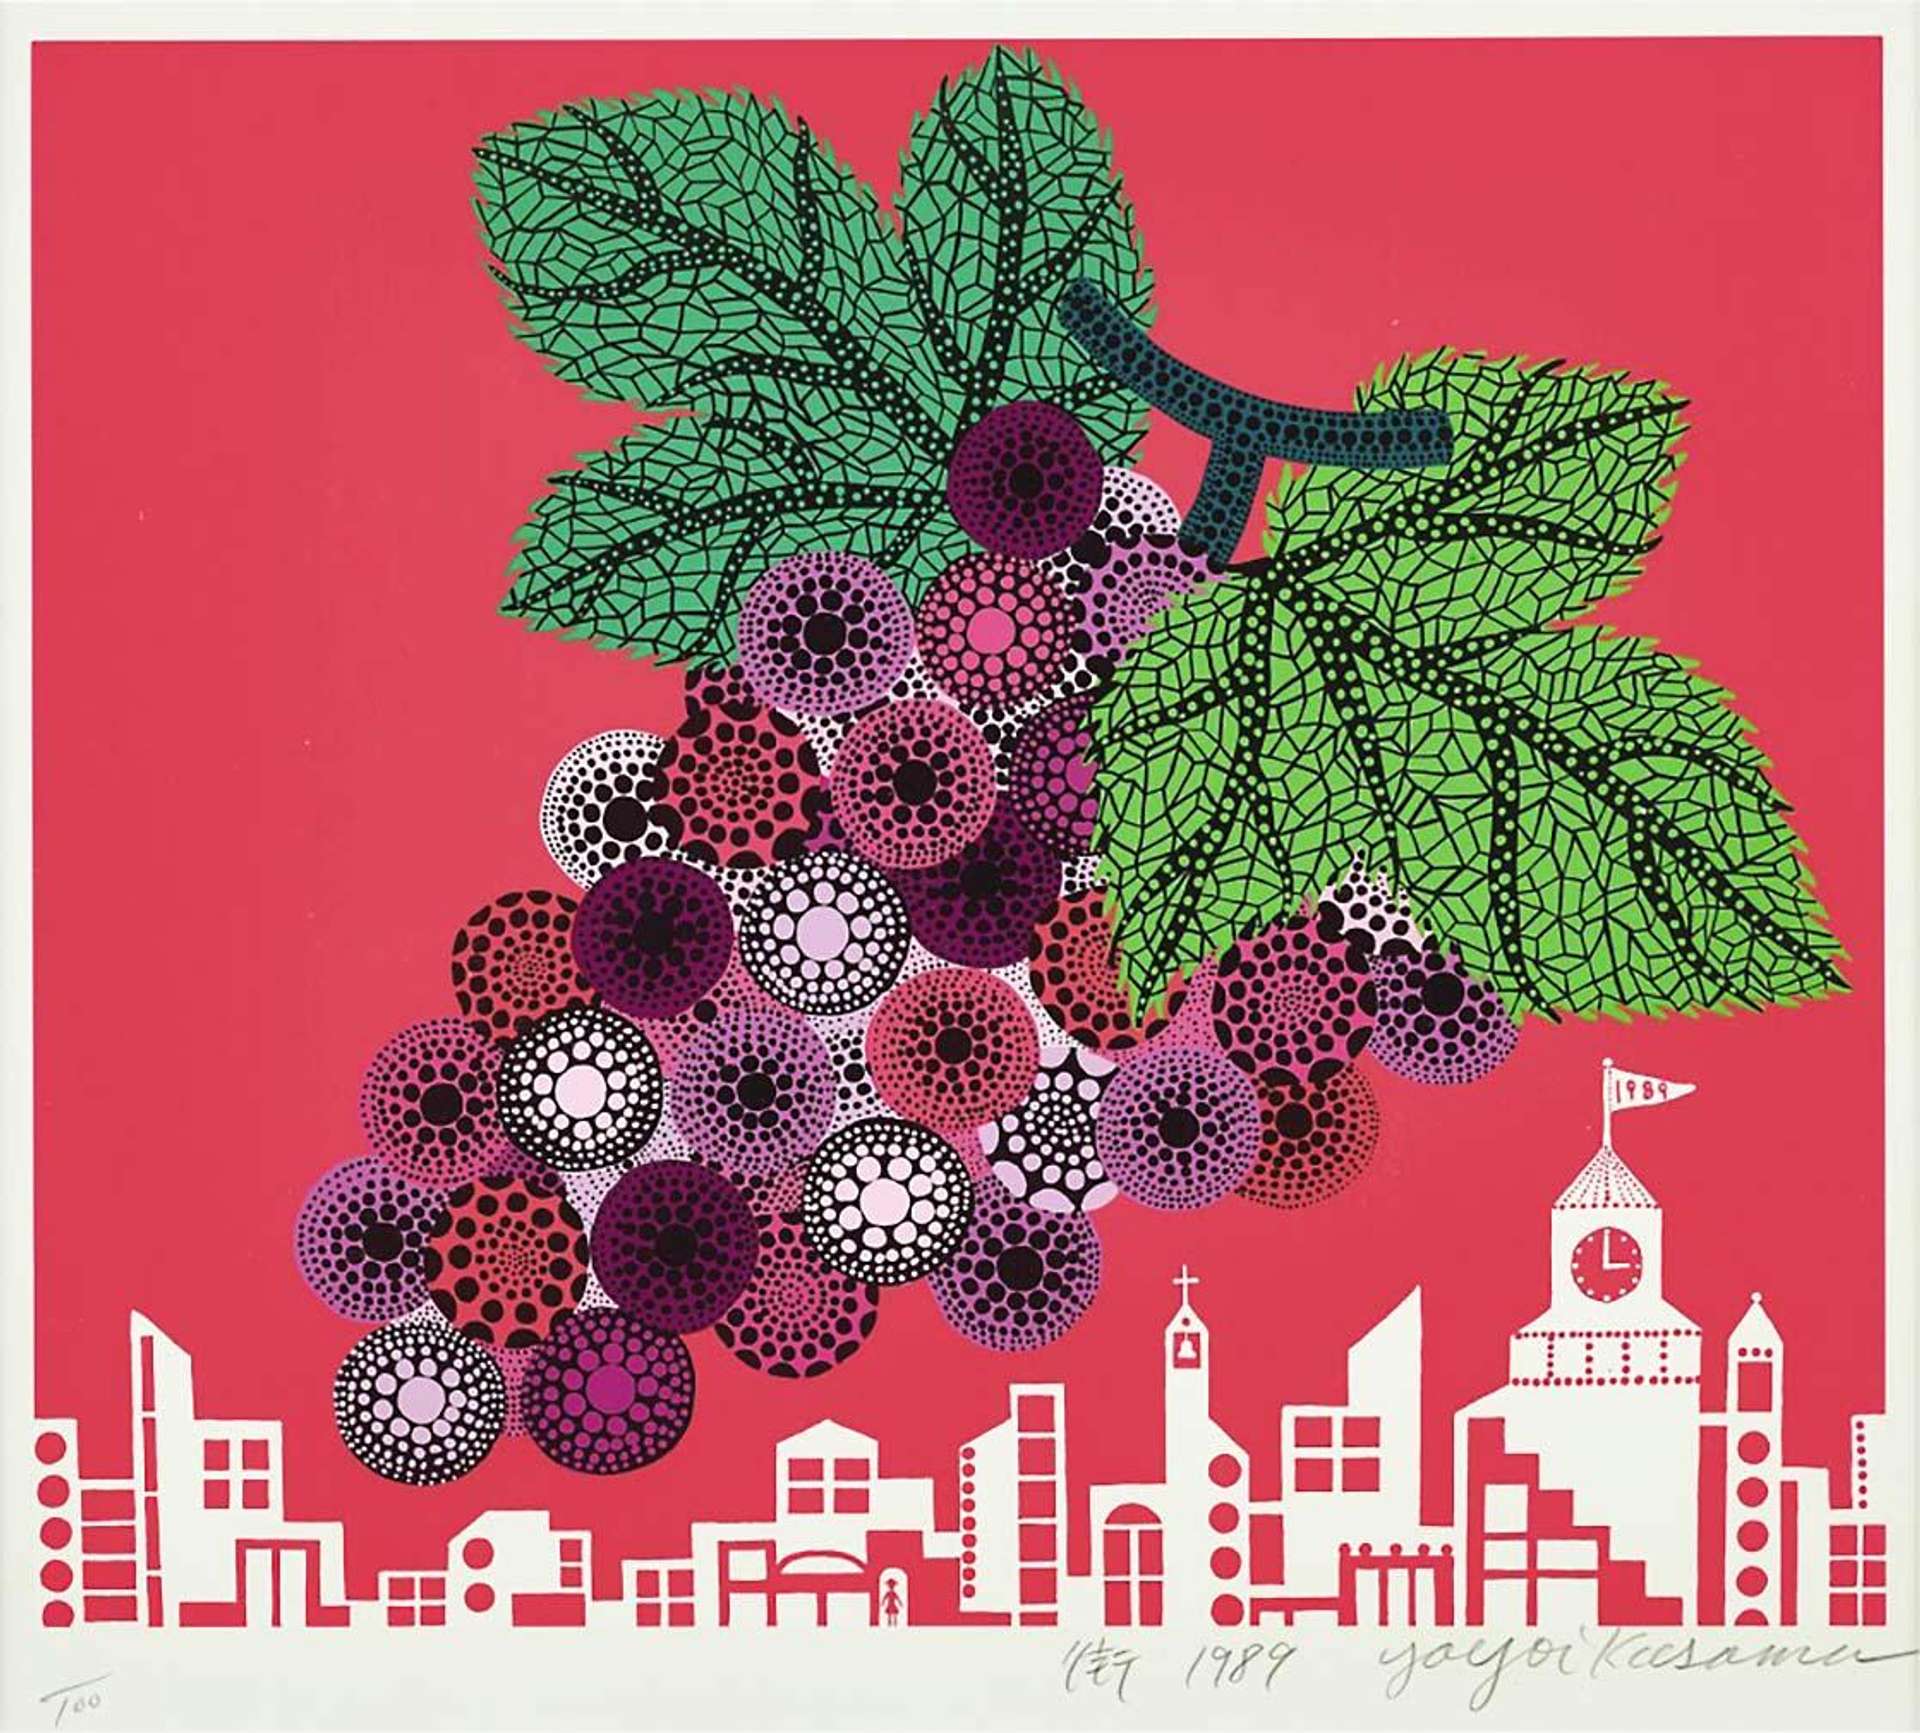 Grapes In The City - Signed Print by Yayoi Kusama 1989 - MyArtBroker